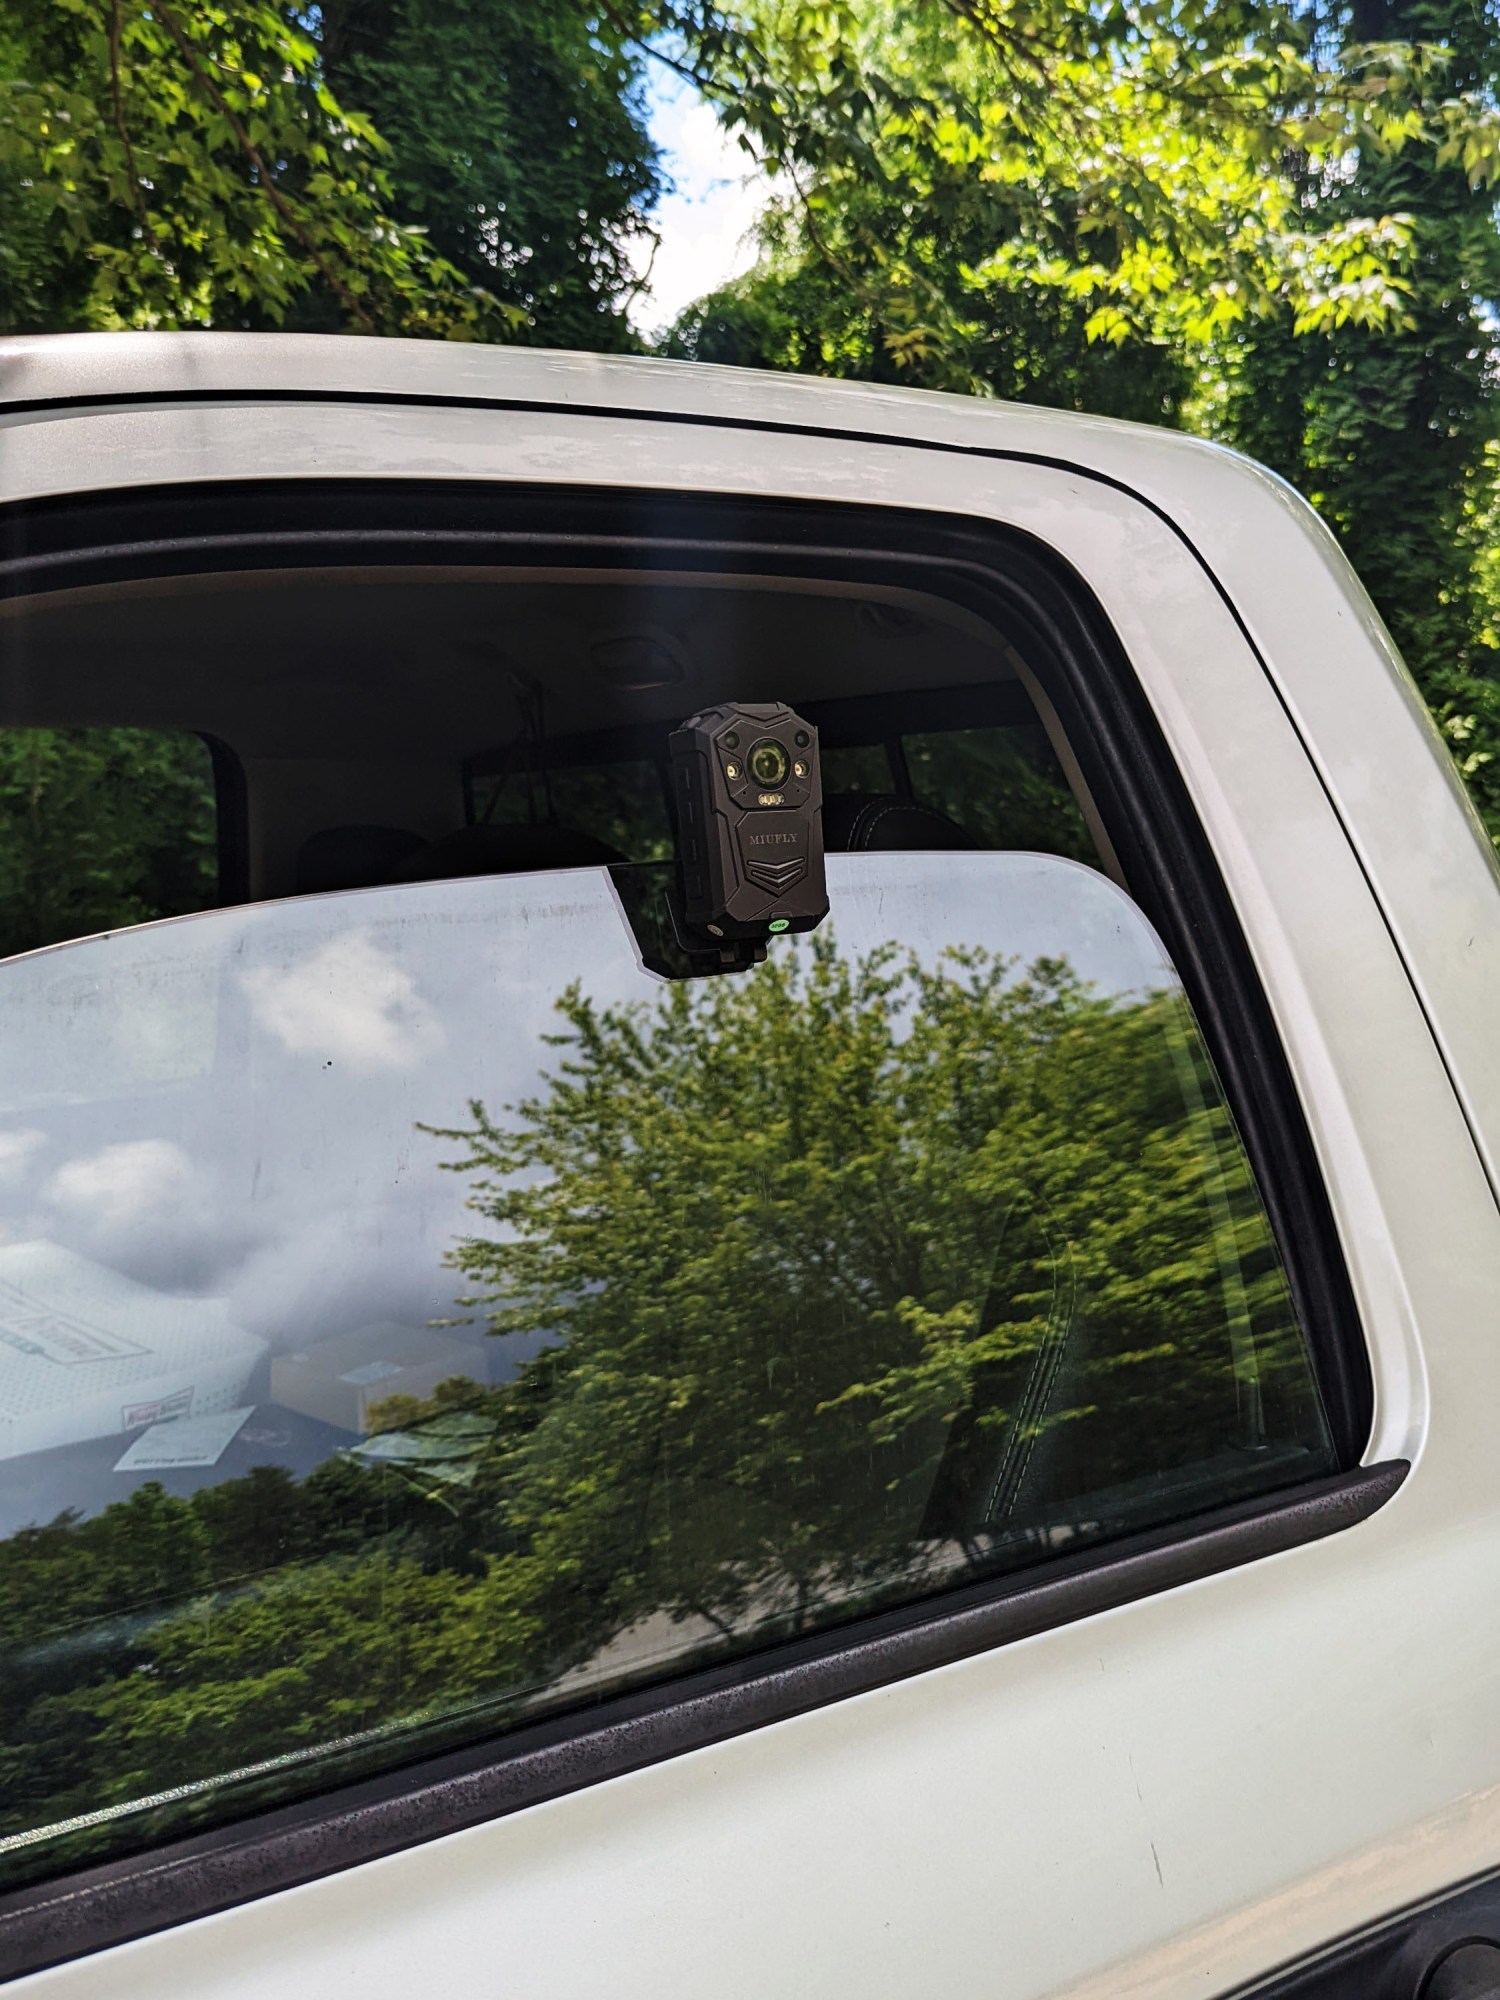 surveillance camera on truck window